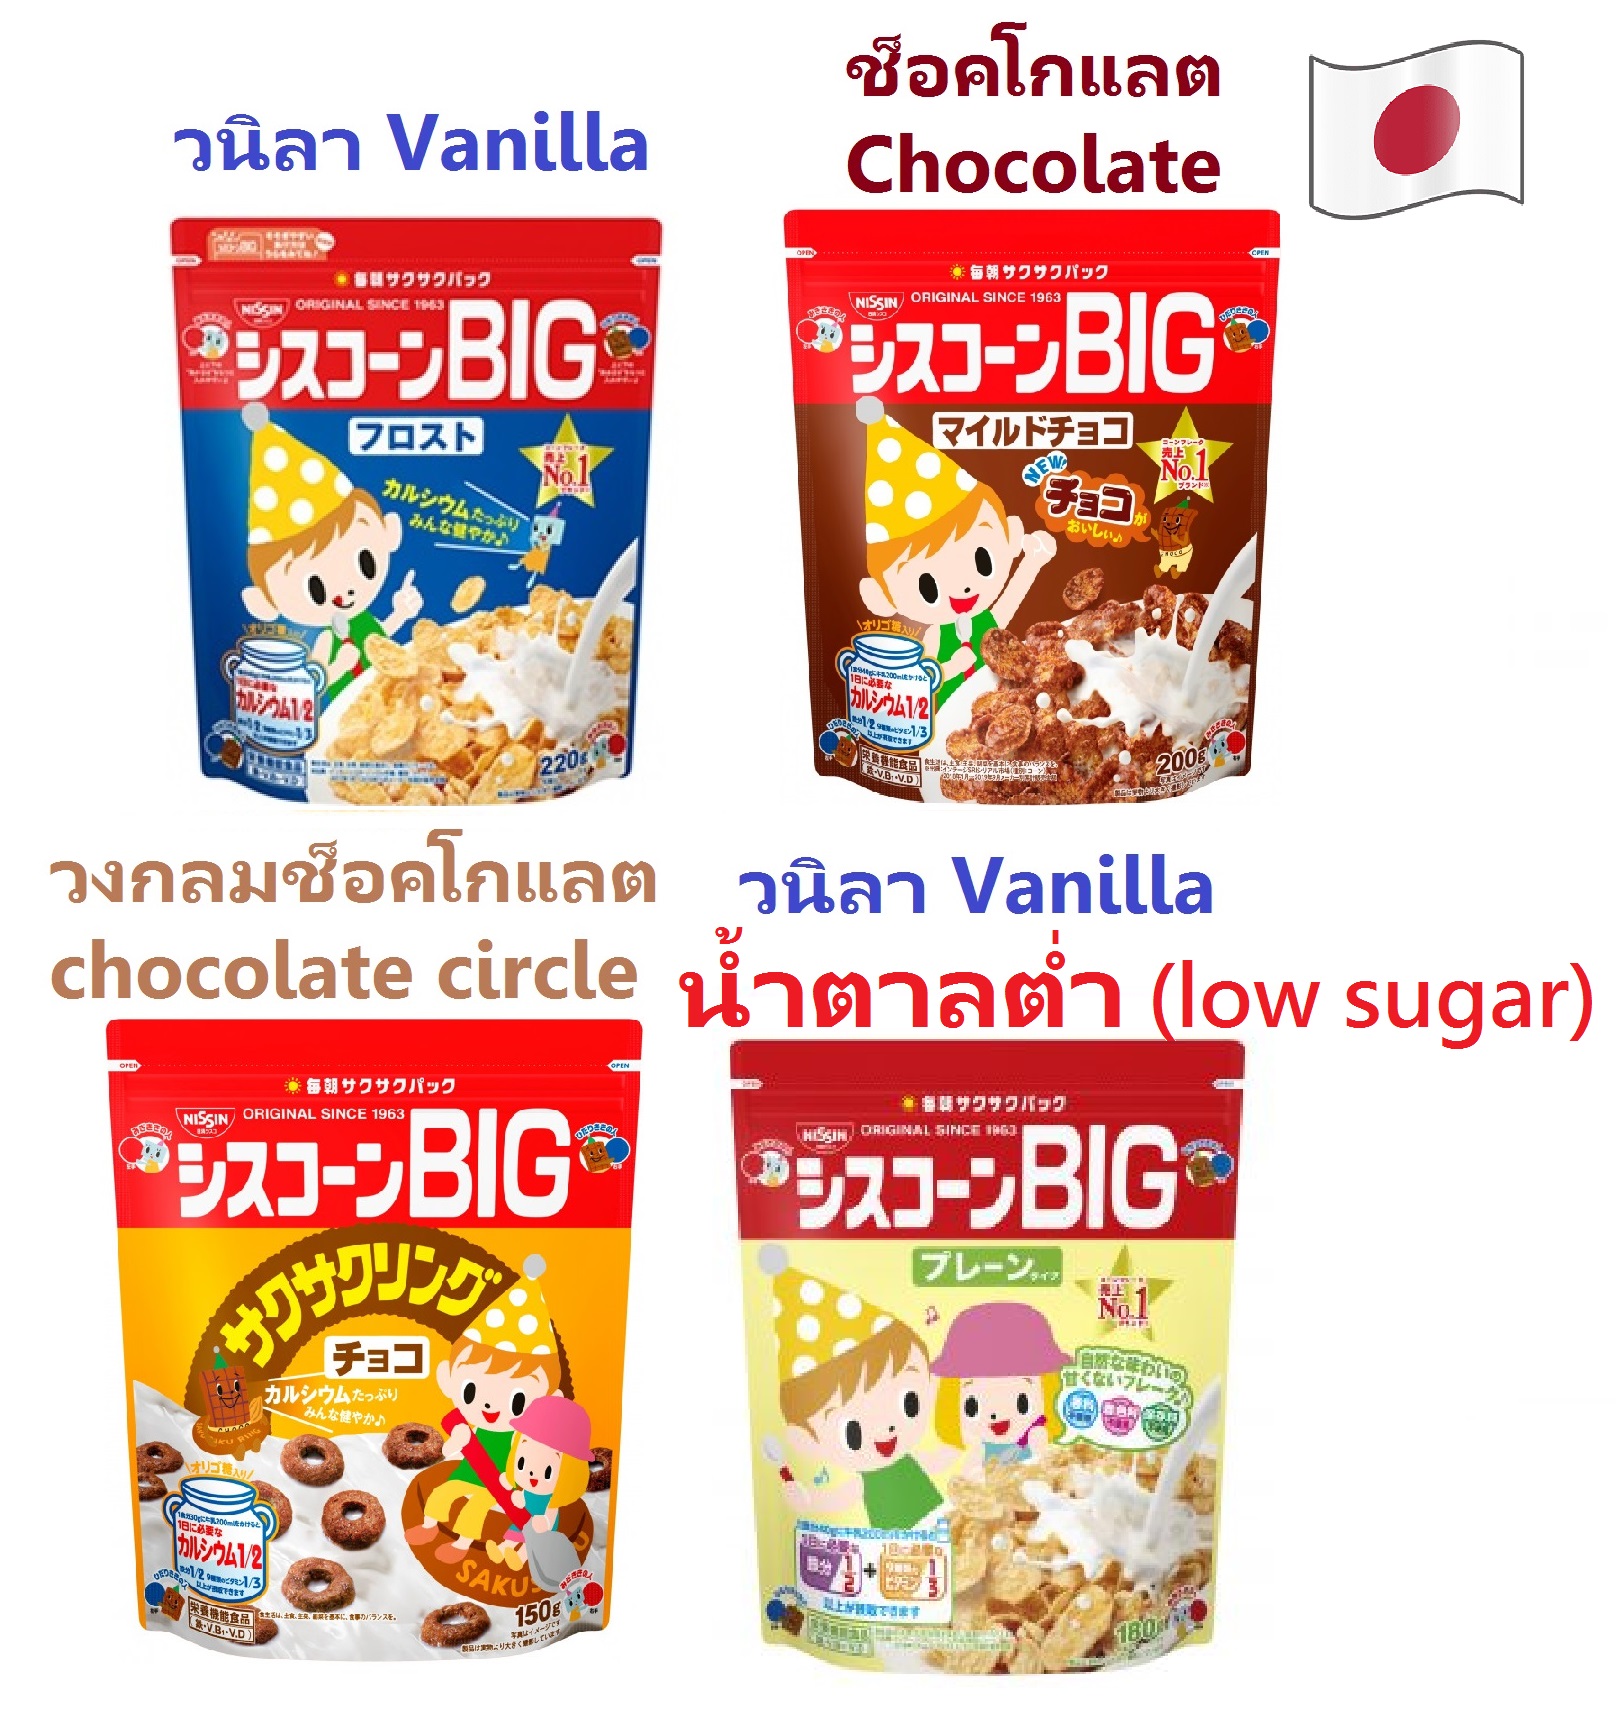 JAPAN NISSIN Cereal Corn Flakes 200g ญี่ปุ่น นีชสิ้น อาหารเช้า ซีเรียล คอร์นเฟลกส์ 200 กรัม รสดั้งเดิมหรือรสโกโก้หรือรสน้ำตาลต่ำหรือโกโก้กลมๆ